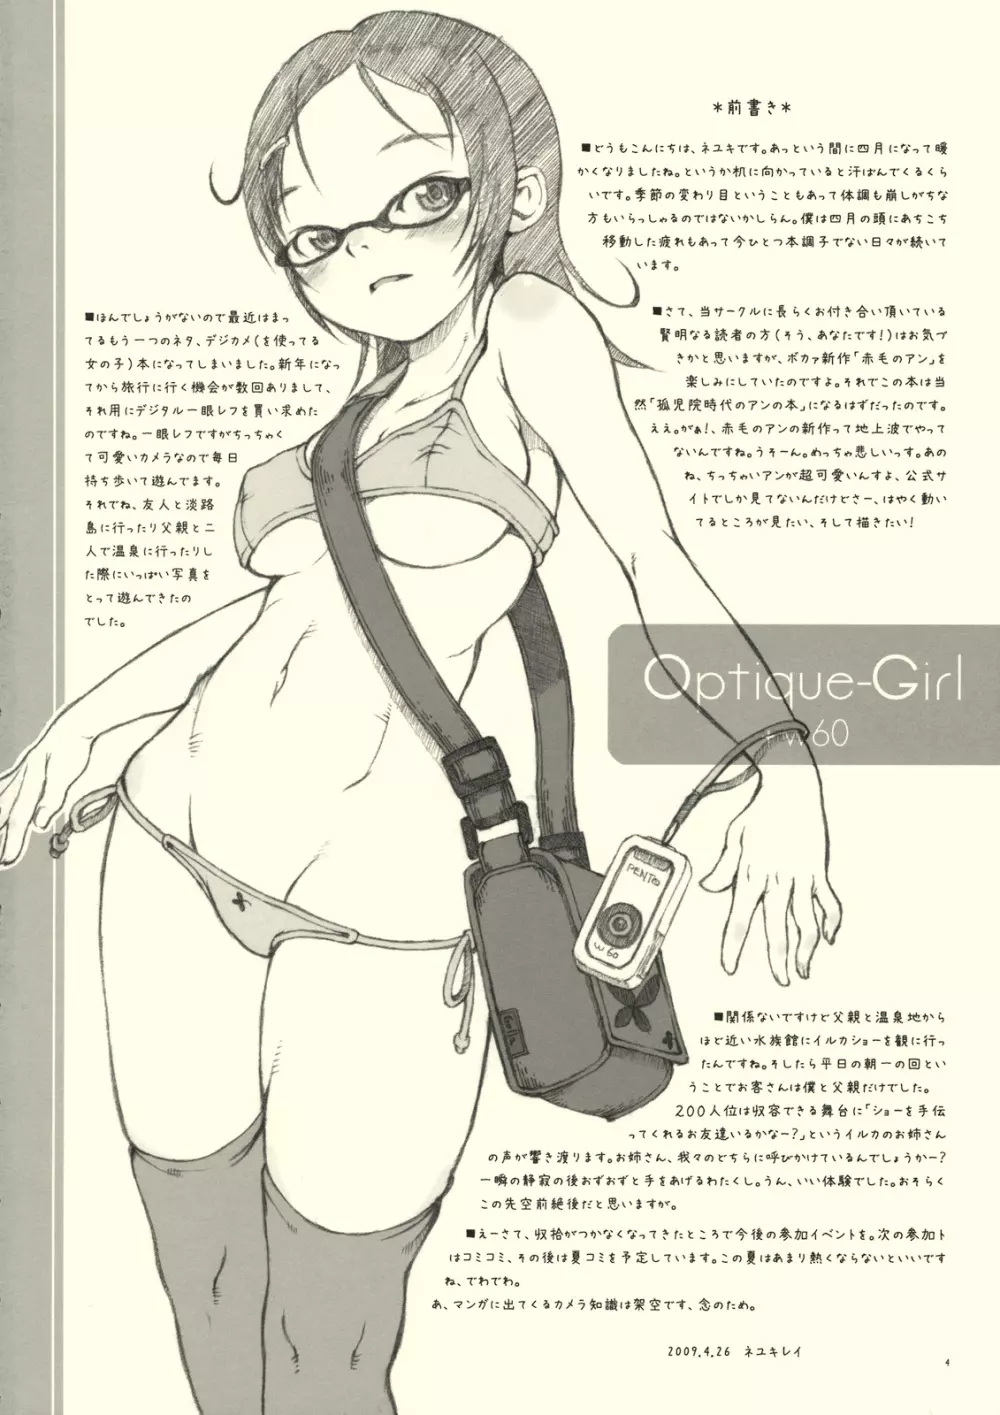 Optique-Girl 3ページ